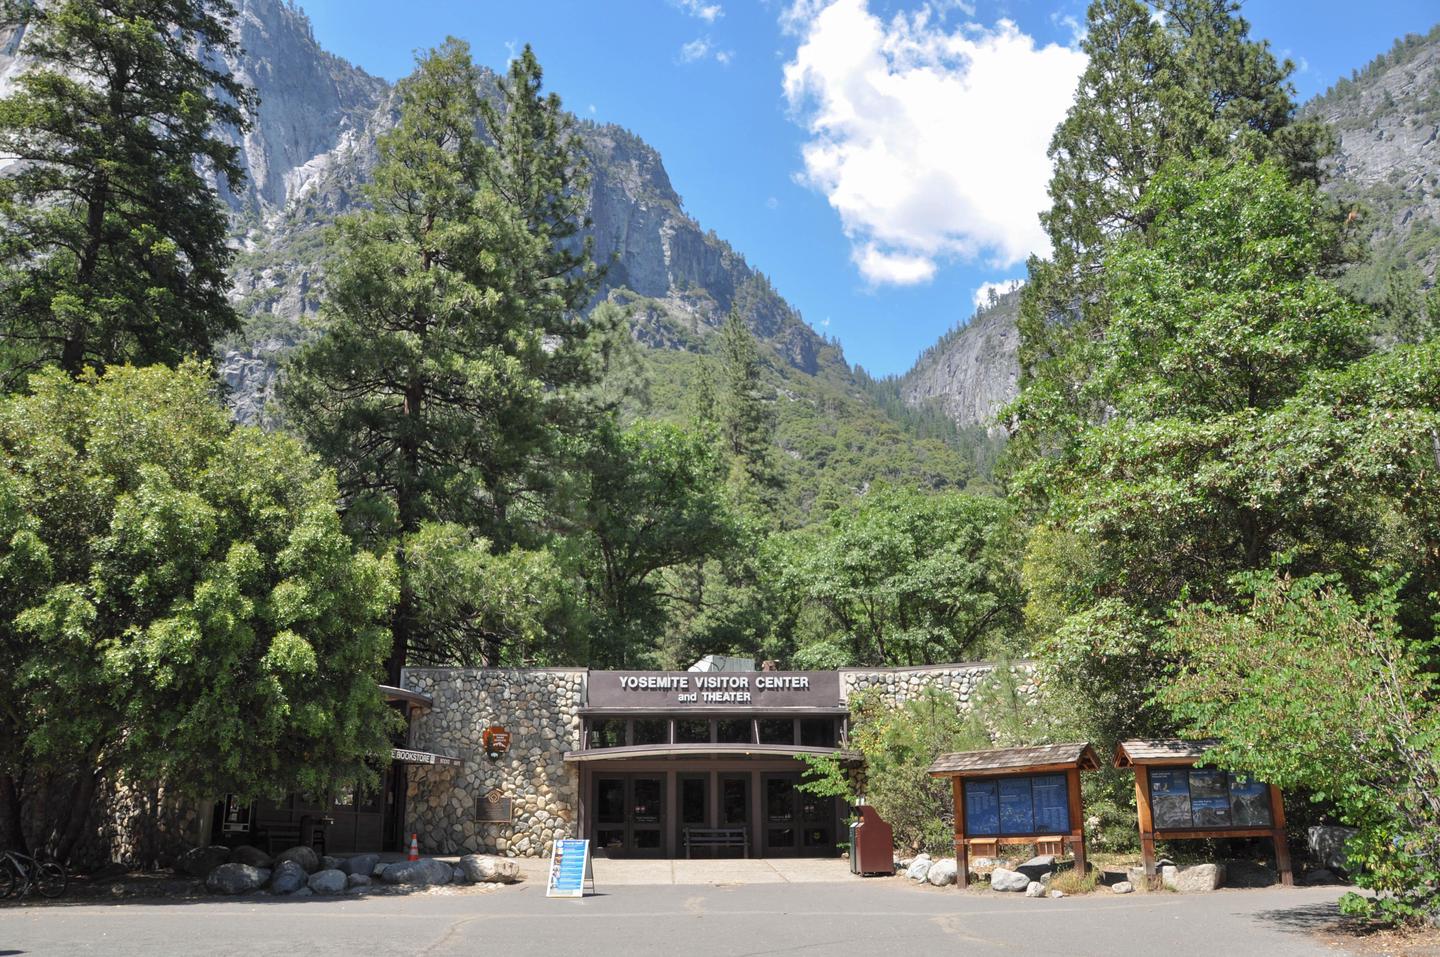 Yosemite Valley Visitor Center, Yosemite National Park Recreation.gov